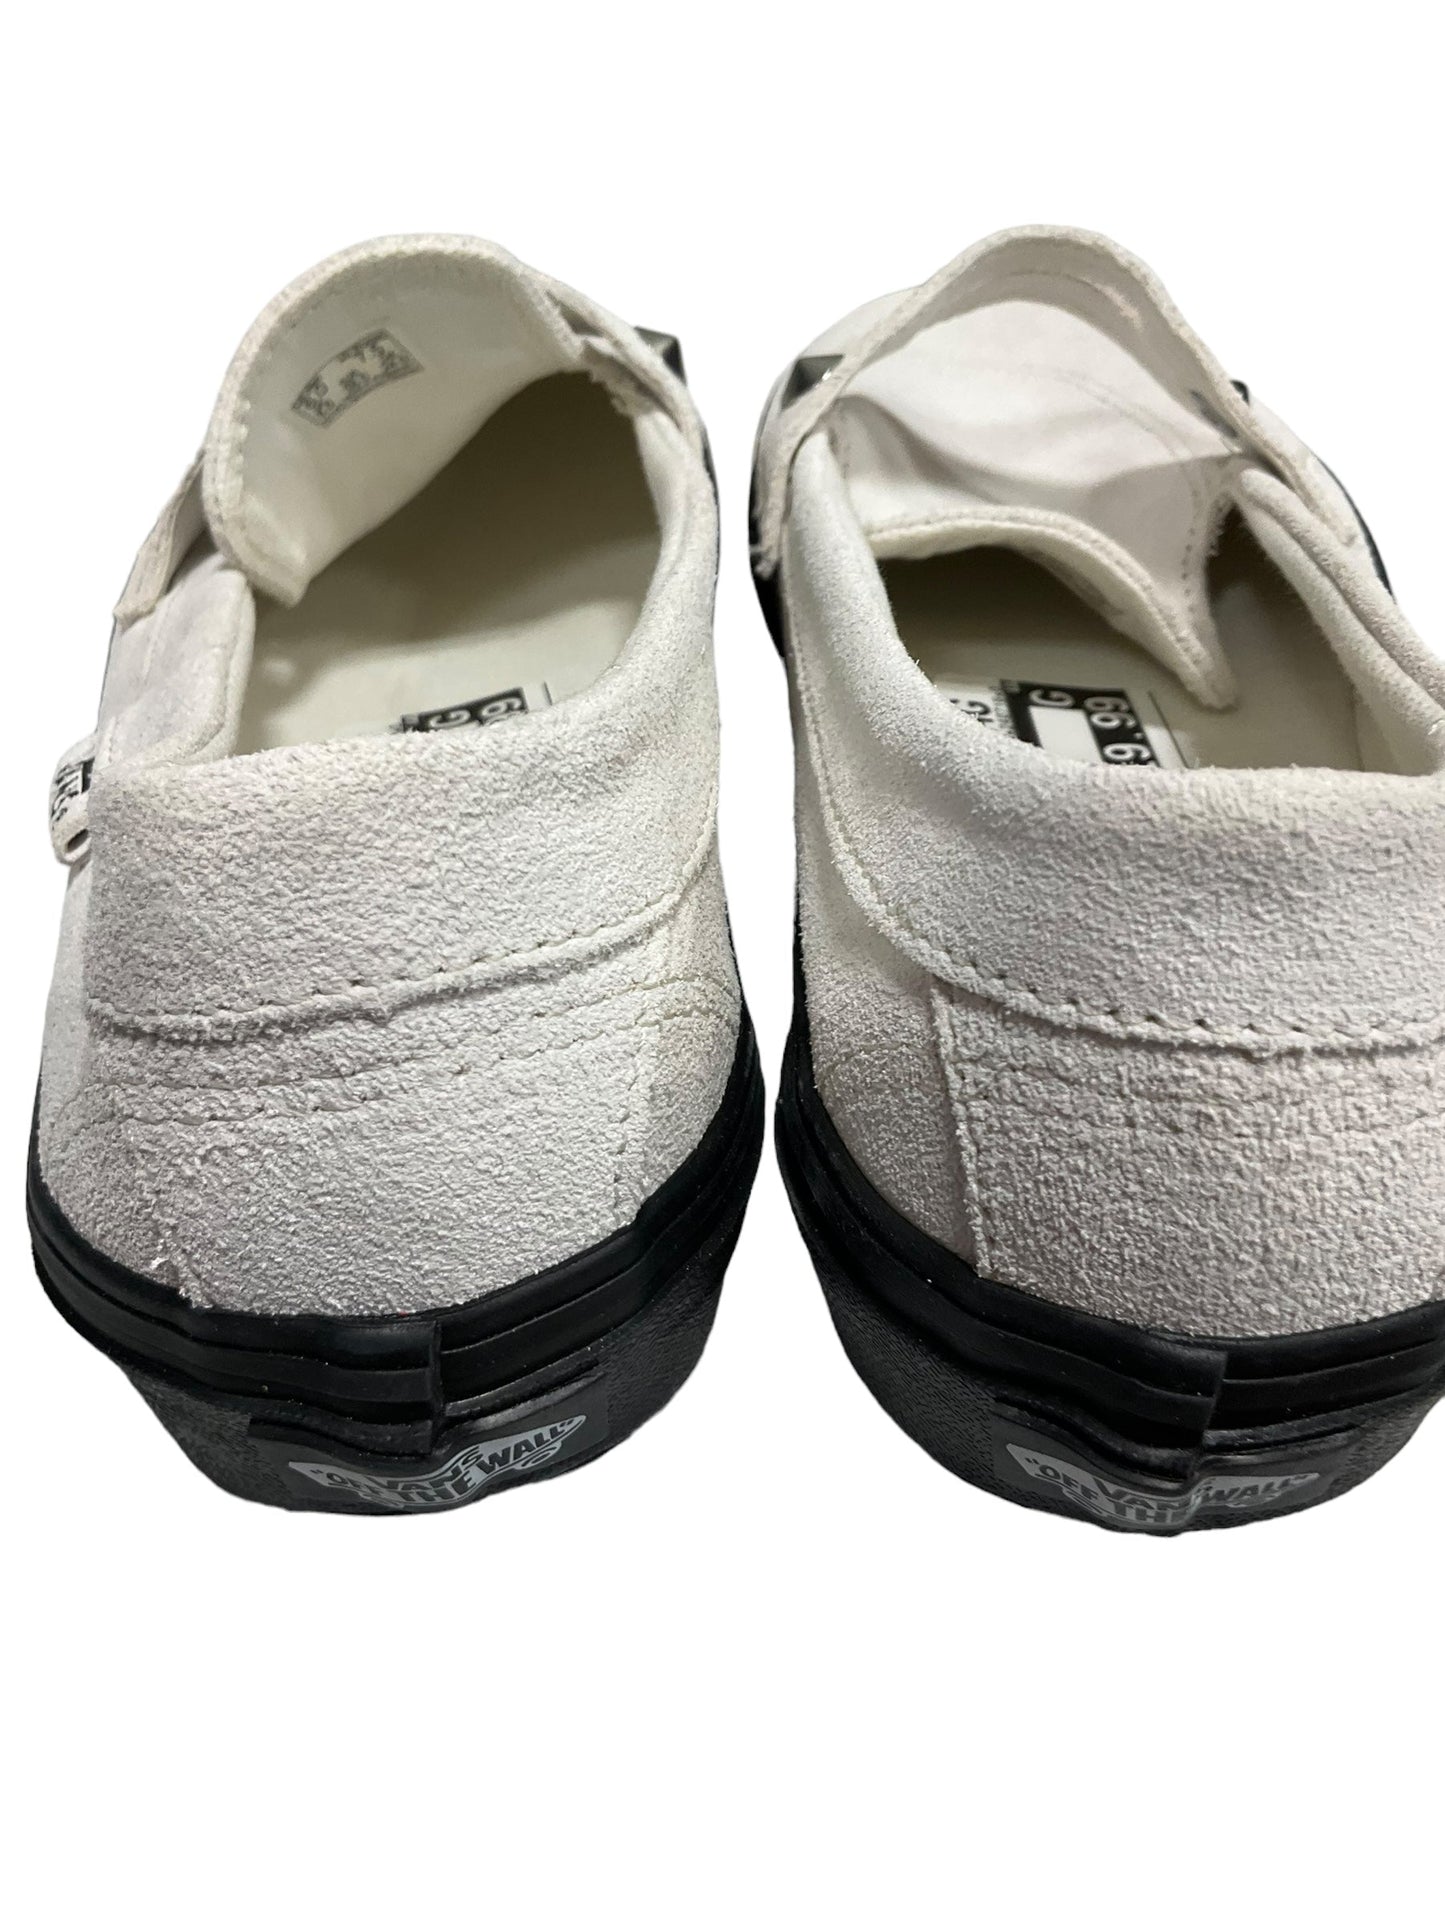 Tan Shoes Flats Vans, Size 7.5